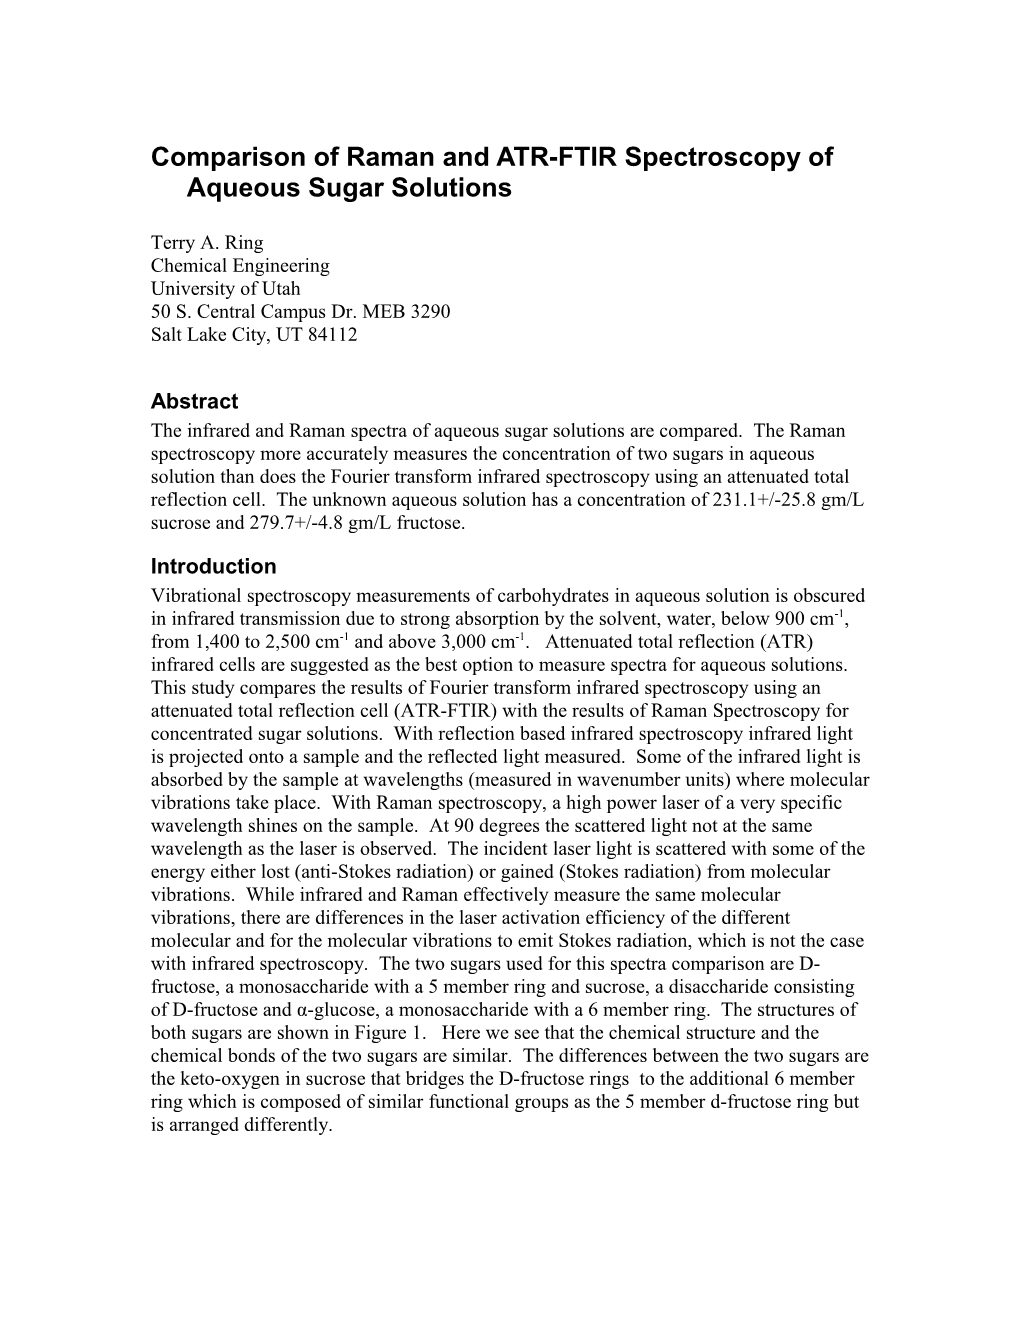 Comparison of Raman and ATR-FTIR Spectroscopy of Aqueous Sugar Solutions